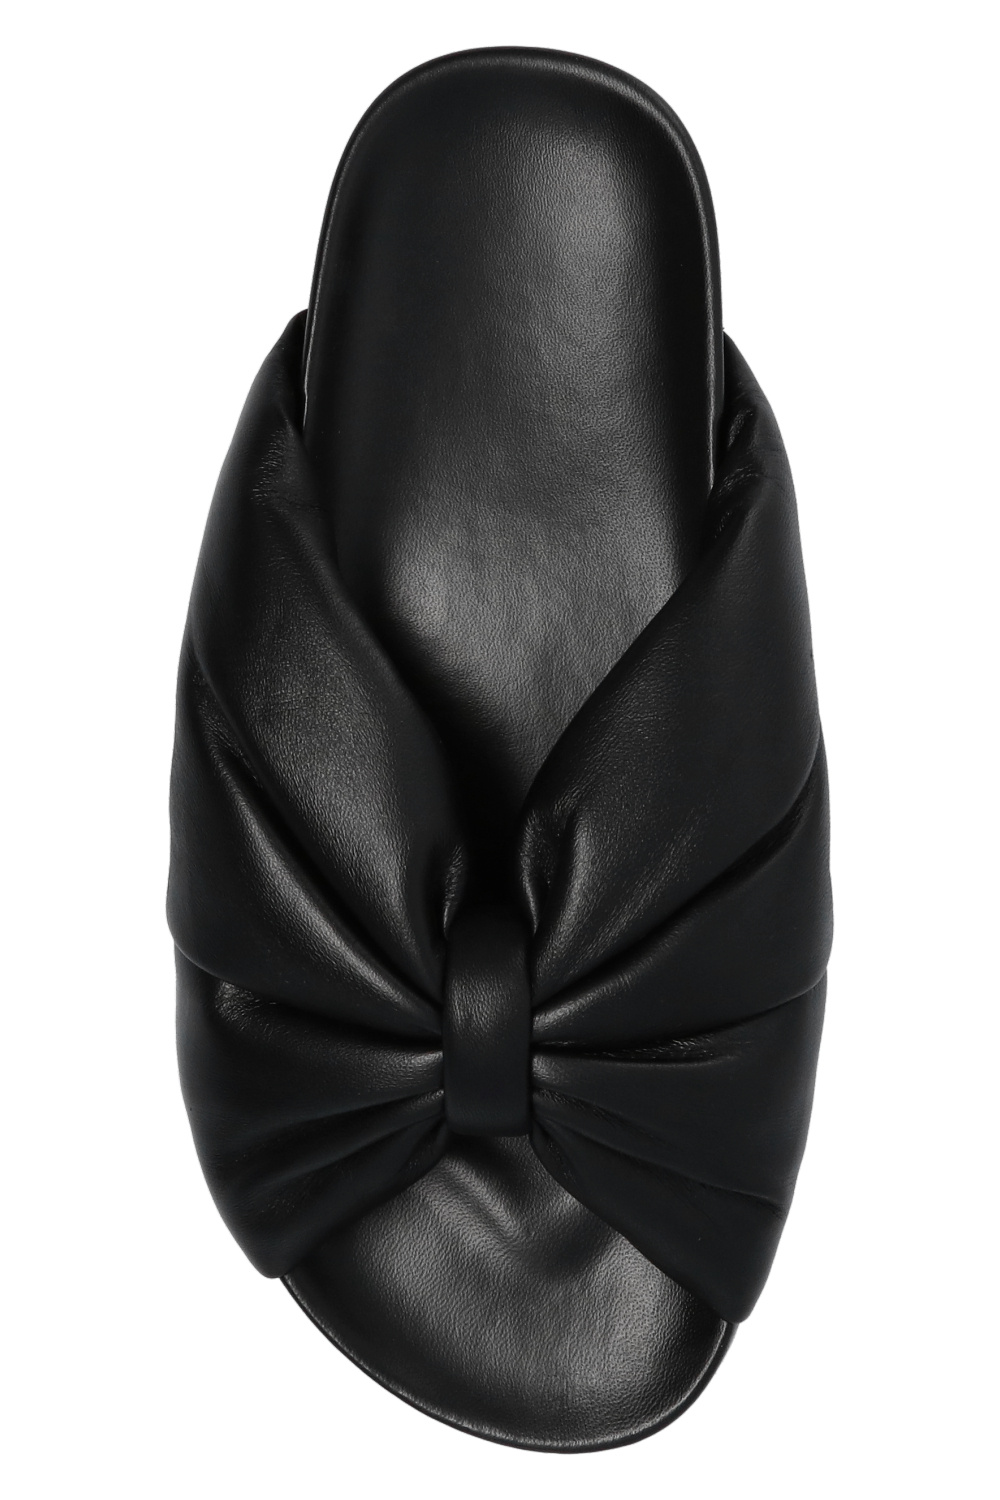 Balenciaga 'Puffy' leather slides | Women's Shoes | Vitkac